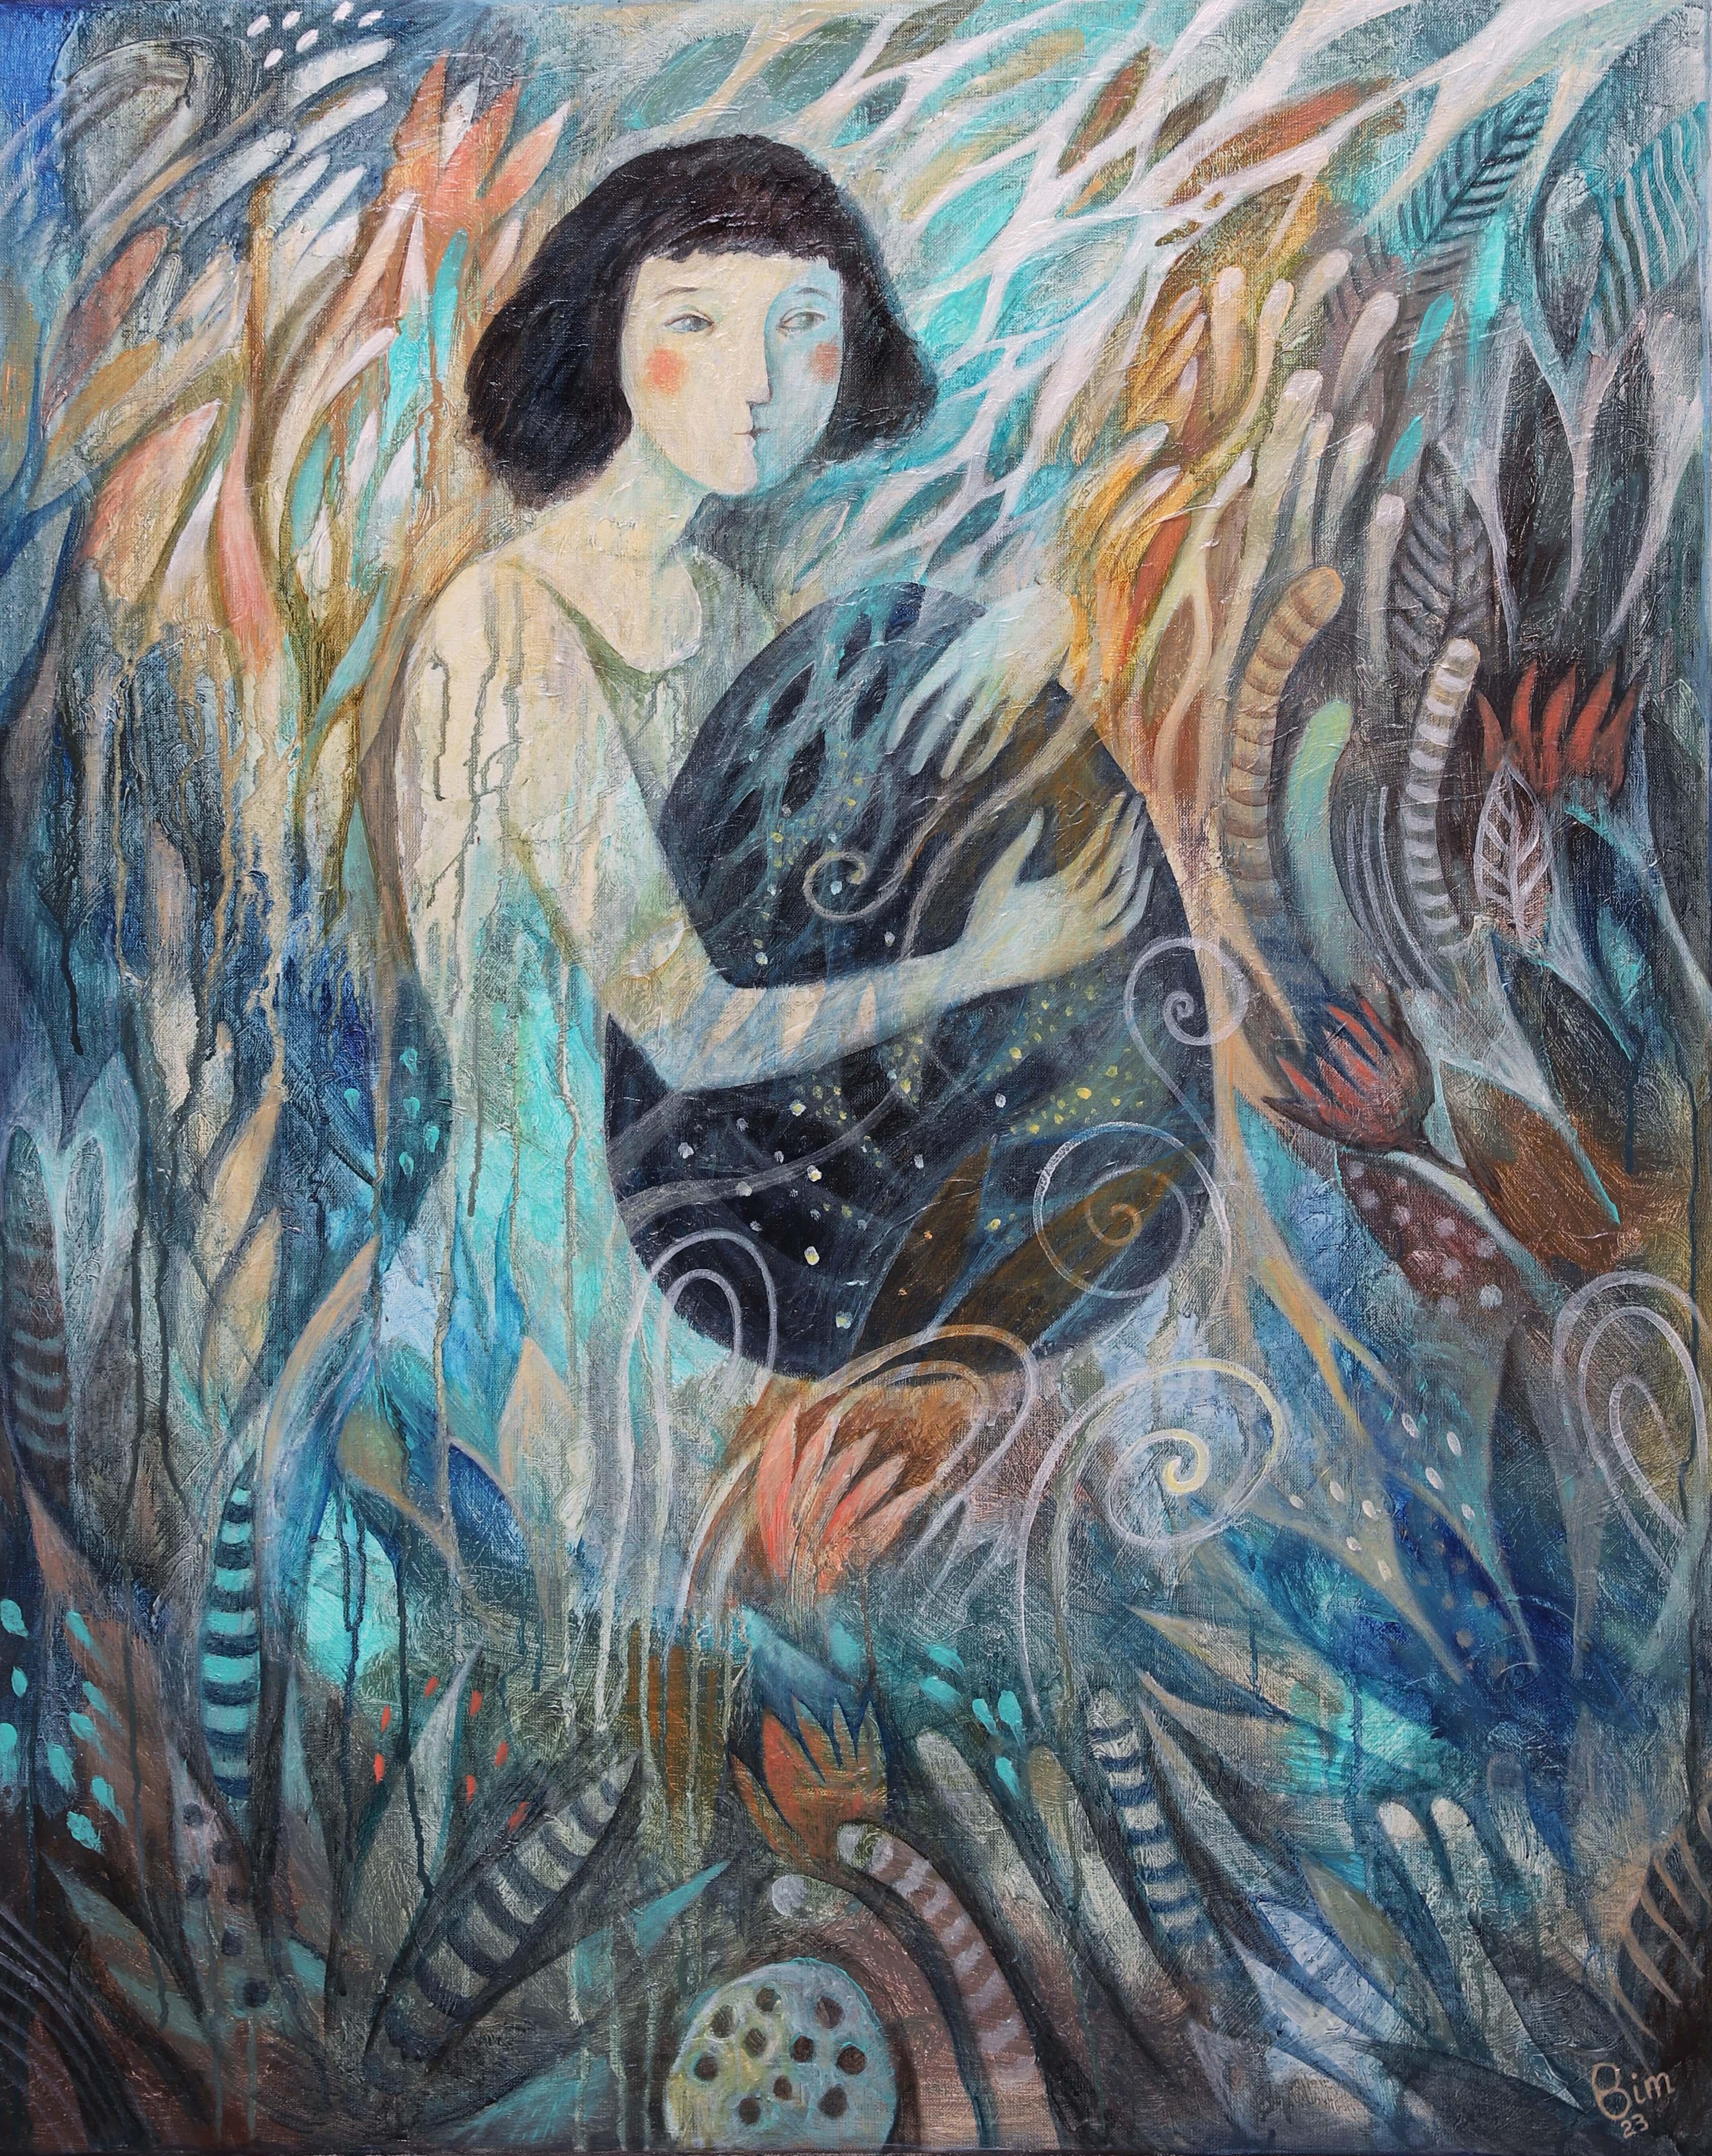 Blue bird of happiness, 100x80cm - Painting by Katya Bim